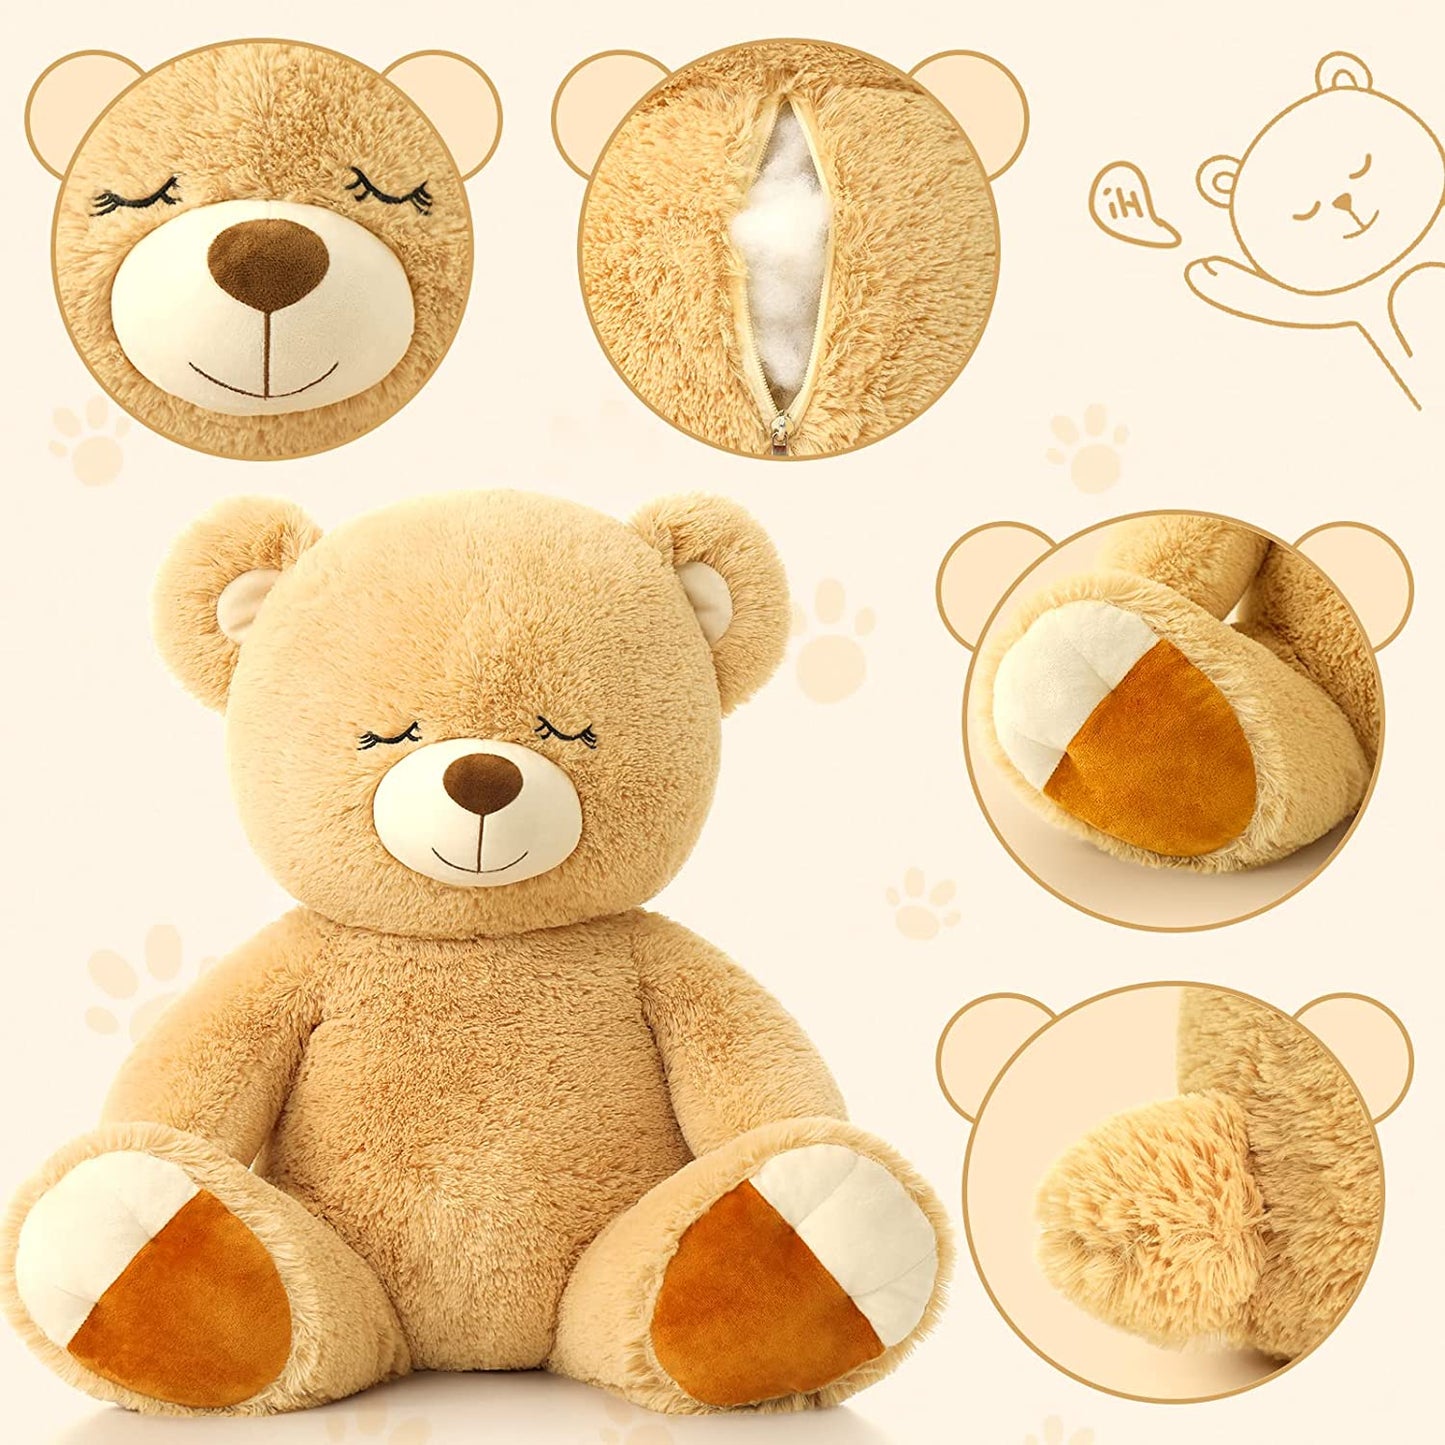 Teddy Bear Stuffed Animal Toy, Light Brown, 23.6 Inches - MorisMos Plush Toys